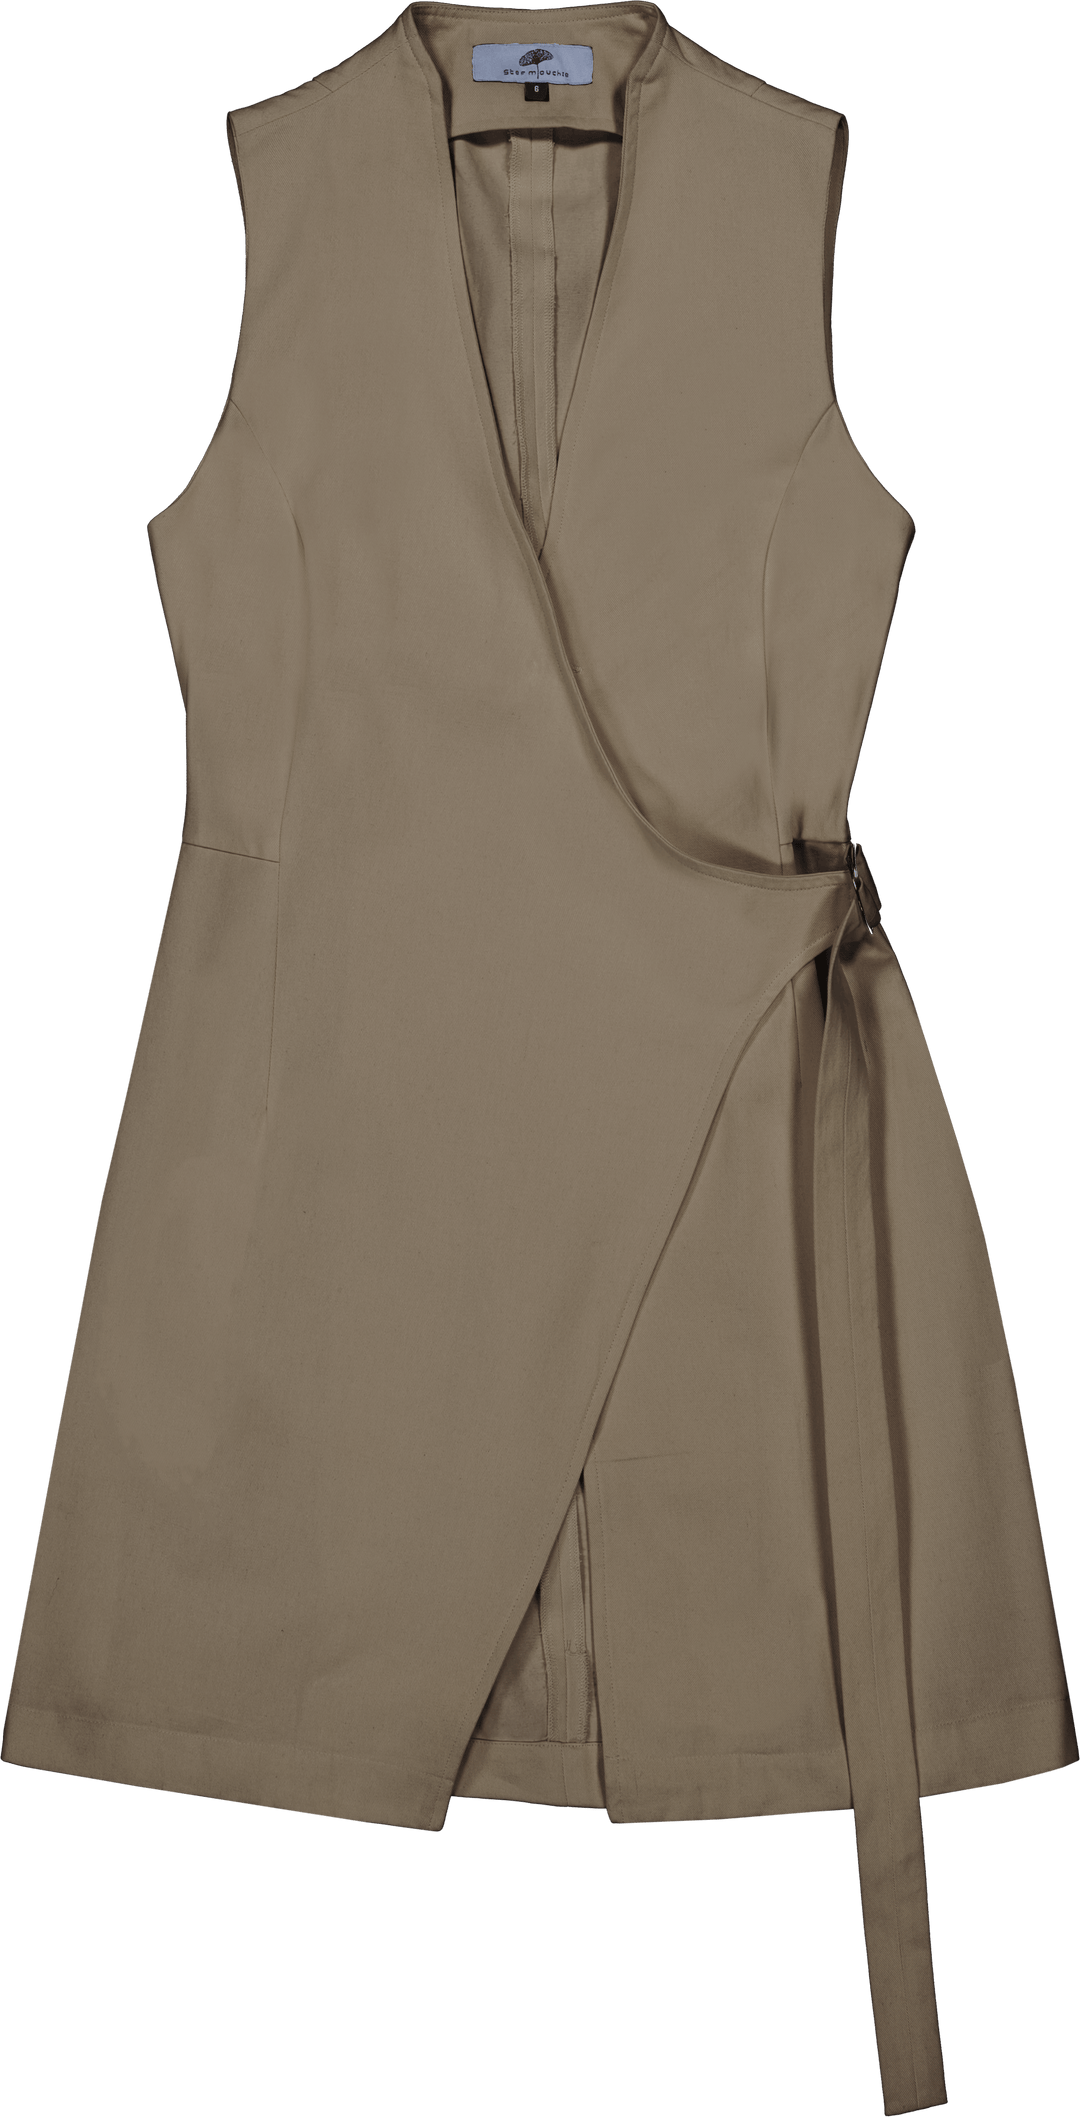 Crossed Front Asymmetric Closure Sheath Dress in Stratton Khaki Solid Organic Cotton Twill - STEF MOUCHIE